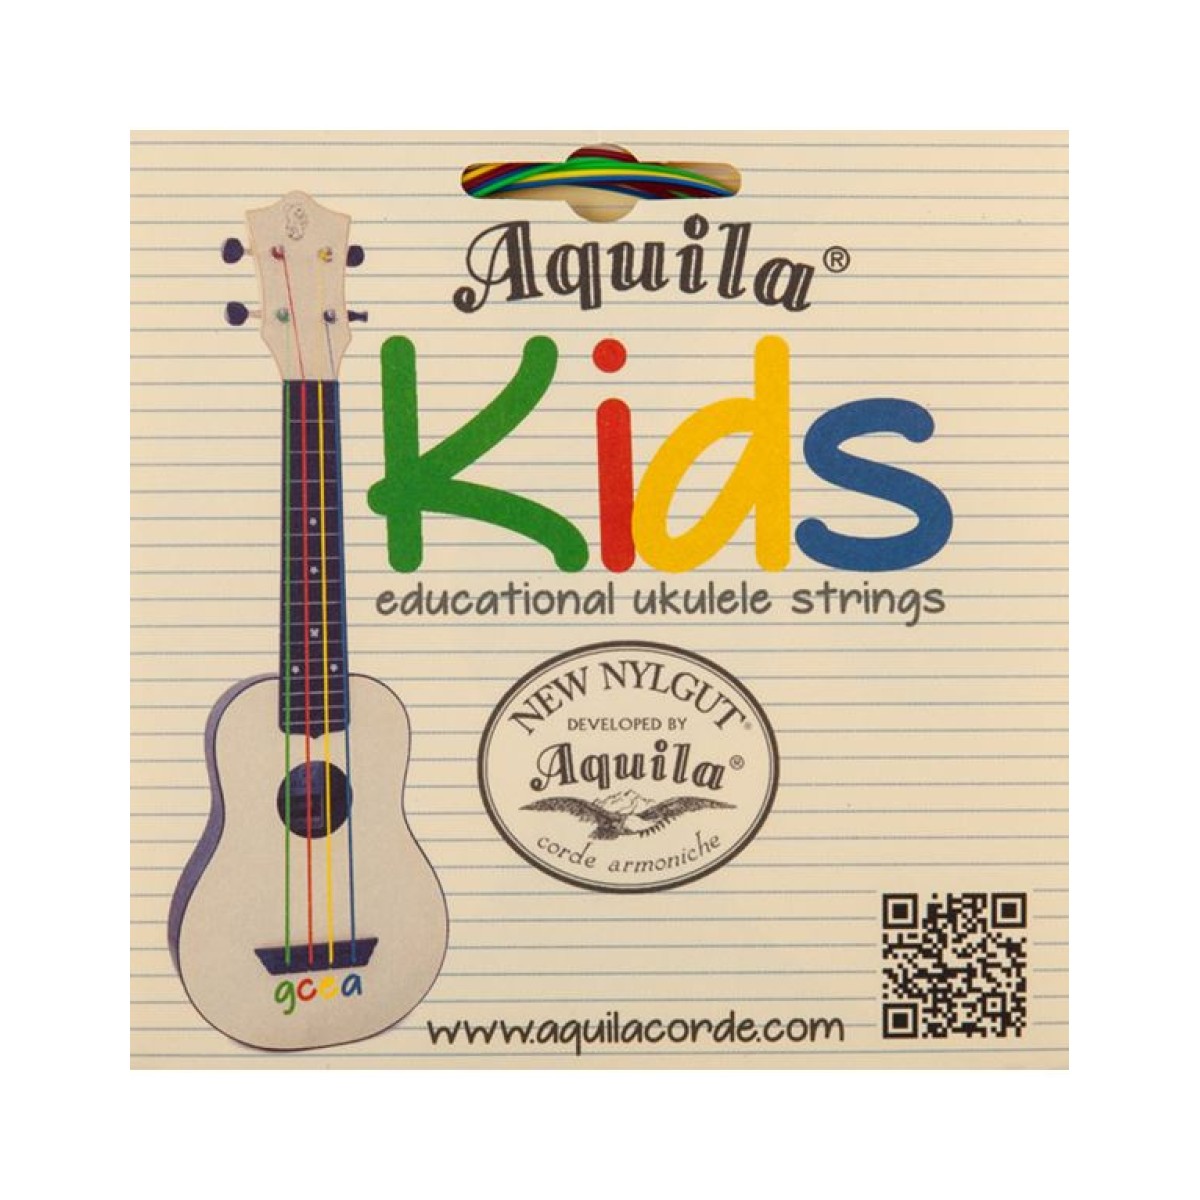 AQUILA 138U Kids Multi Color  Σετ Χορδών για Ukulele Soprano, Concert και Τenor